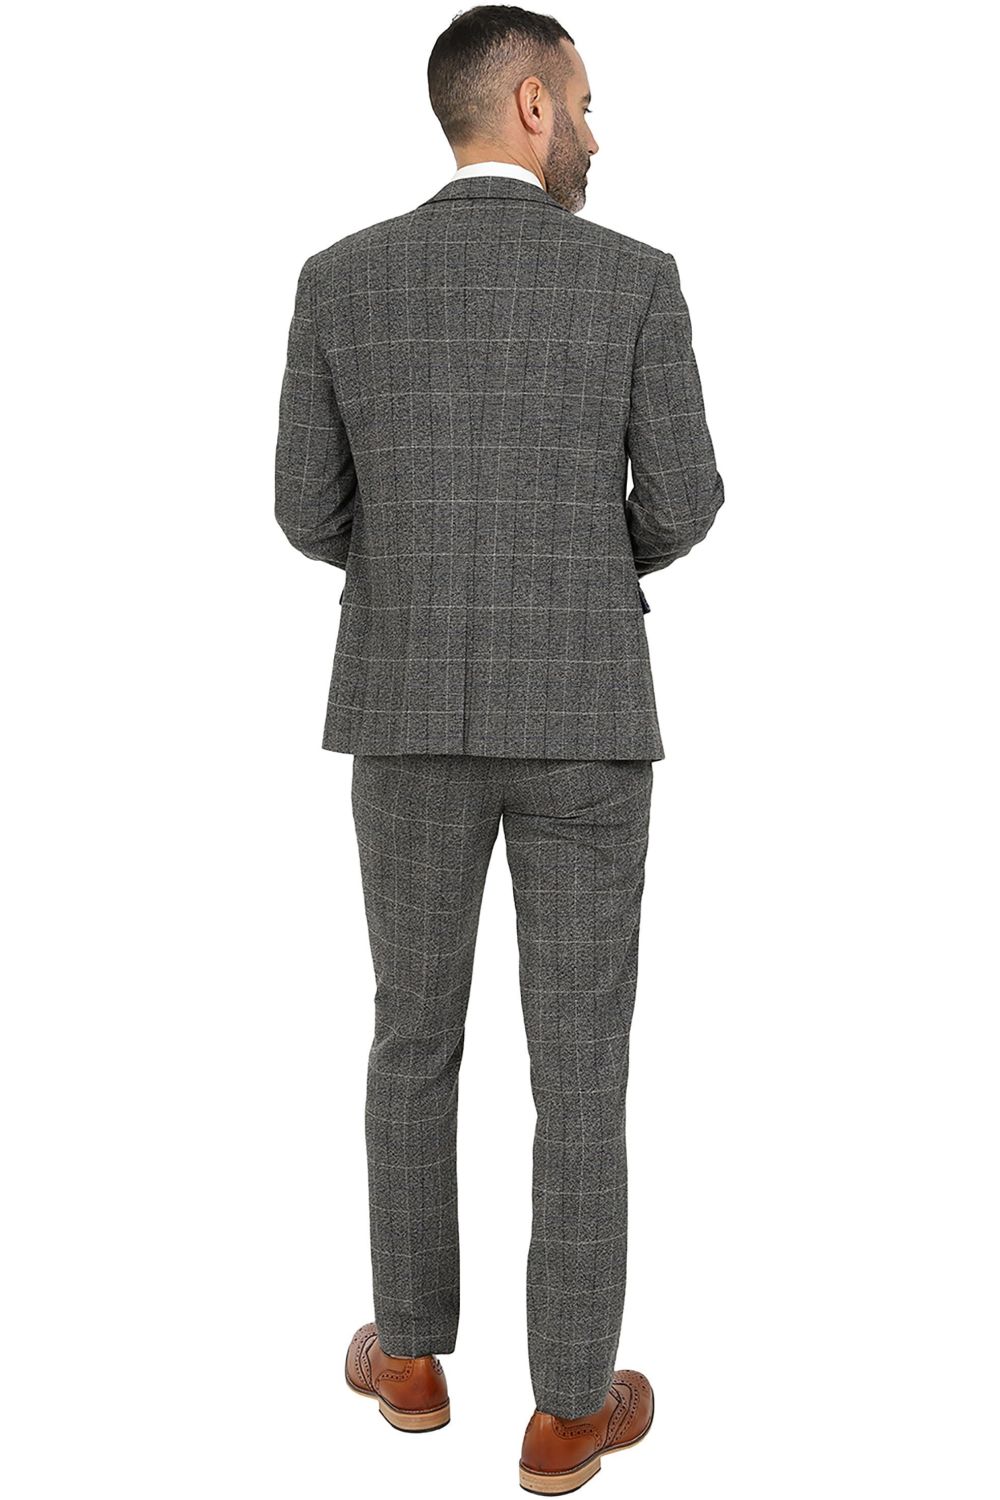 Marc Darcy Scott Grey Tweed Check Suit Jacket